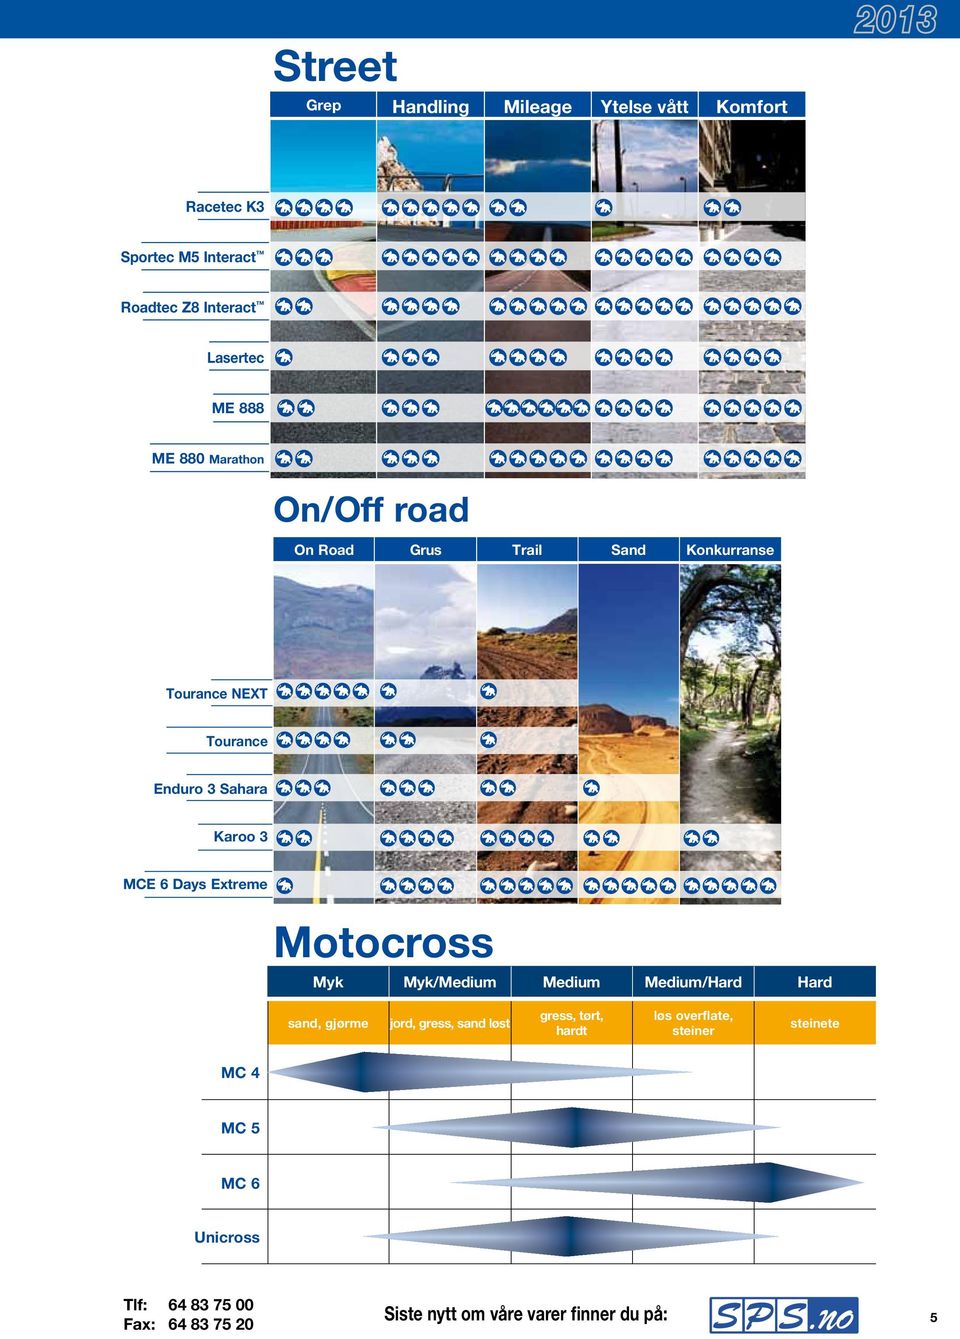 Karoo 3 MCE 6 Days Extreme Motocross Myk Myk/Medium Medium Medium/Hard Hard sand, gjørme jord, gress, sand